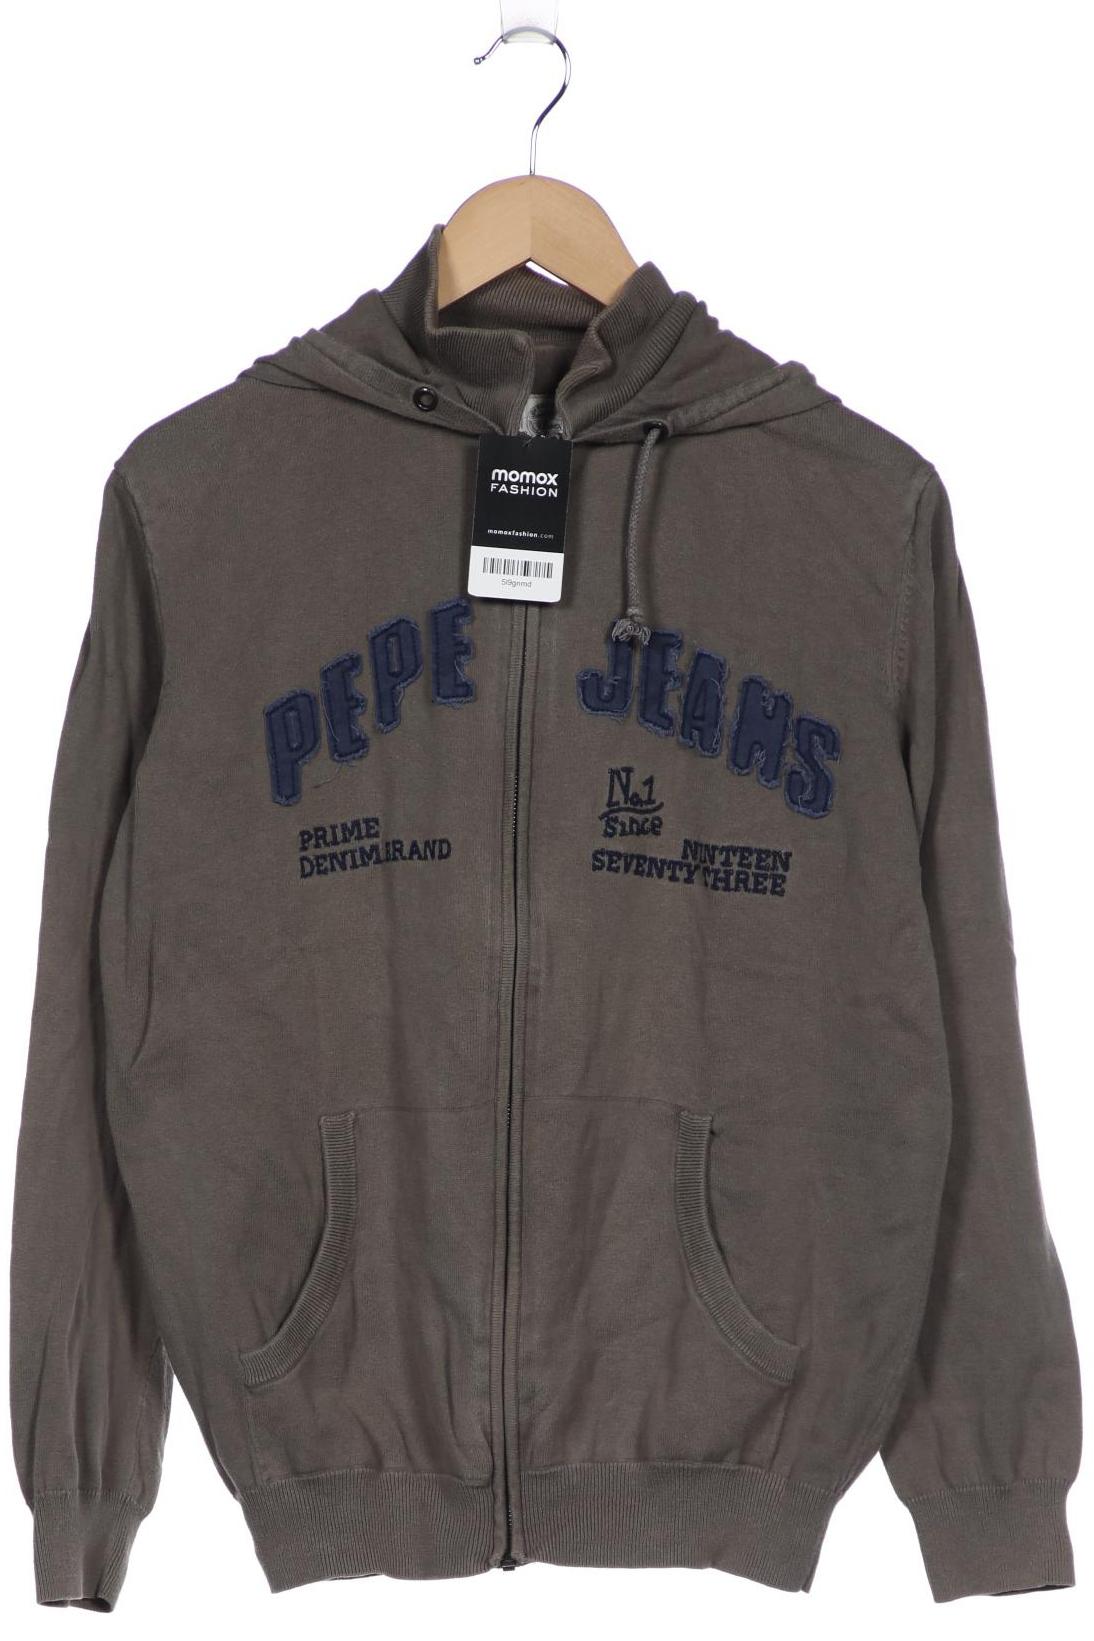 Pepe Jeans Herren Kapuzenpullover, grau, Gr. 52 von Pepe Jeans